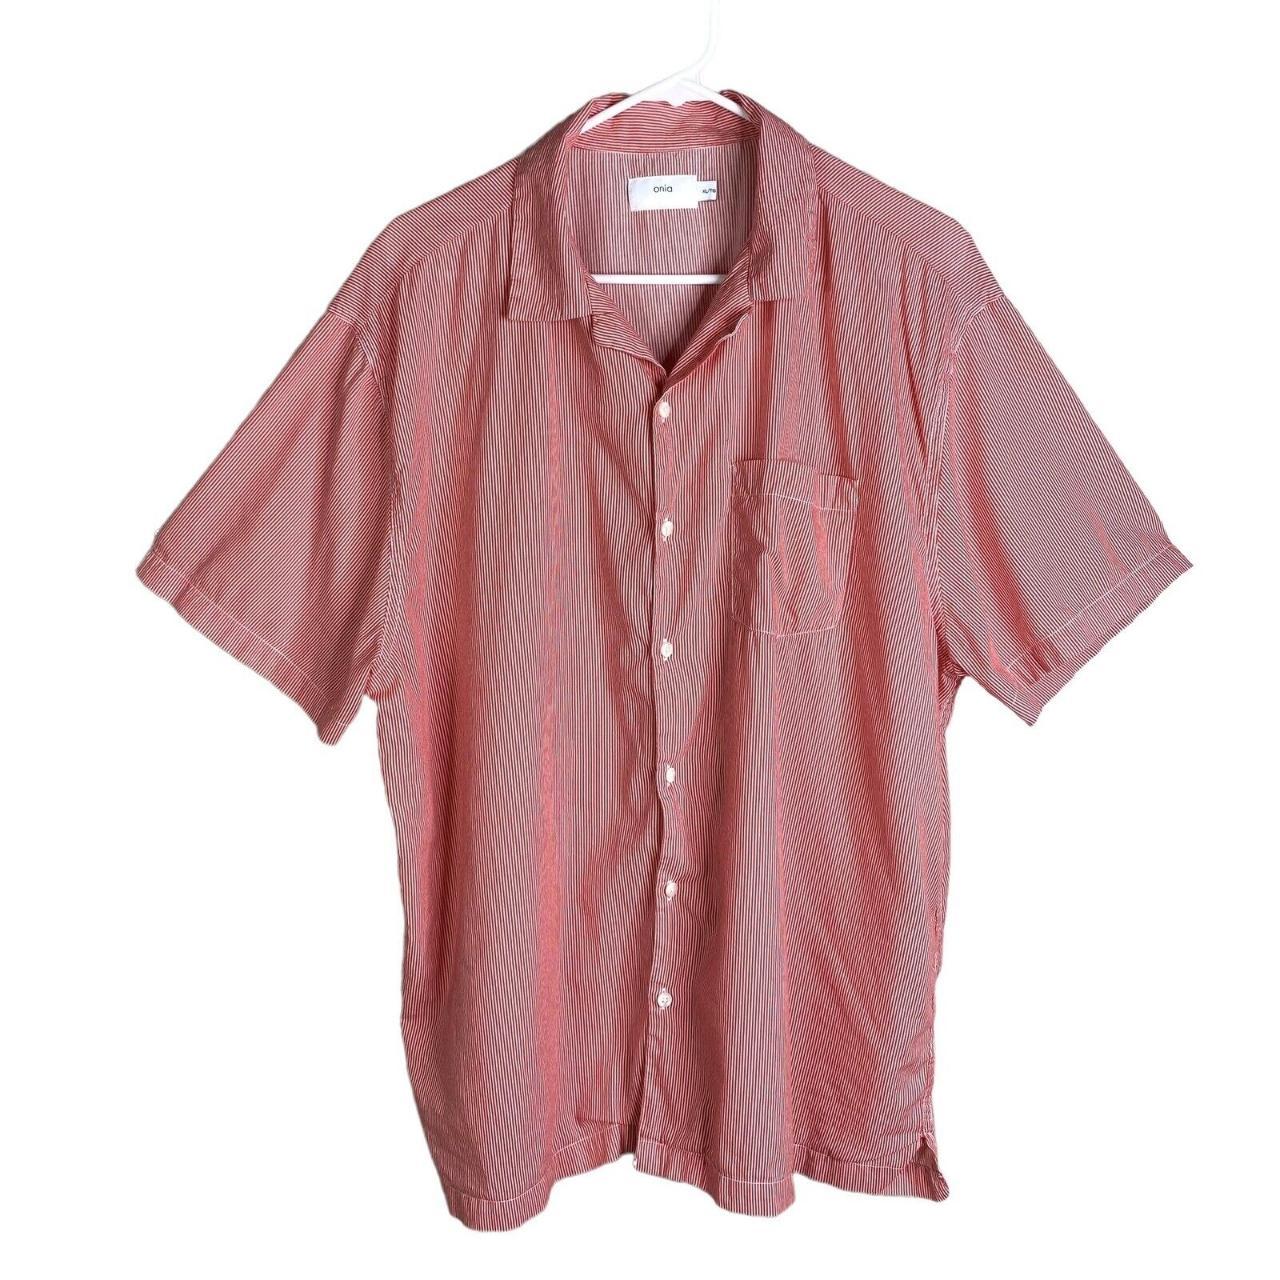 $140 Onia Short Sleeve Button Up Vacation Shirt Mens... - Depop